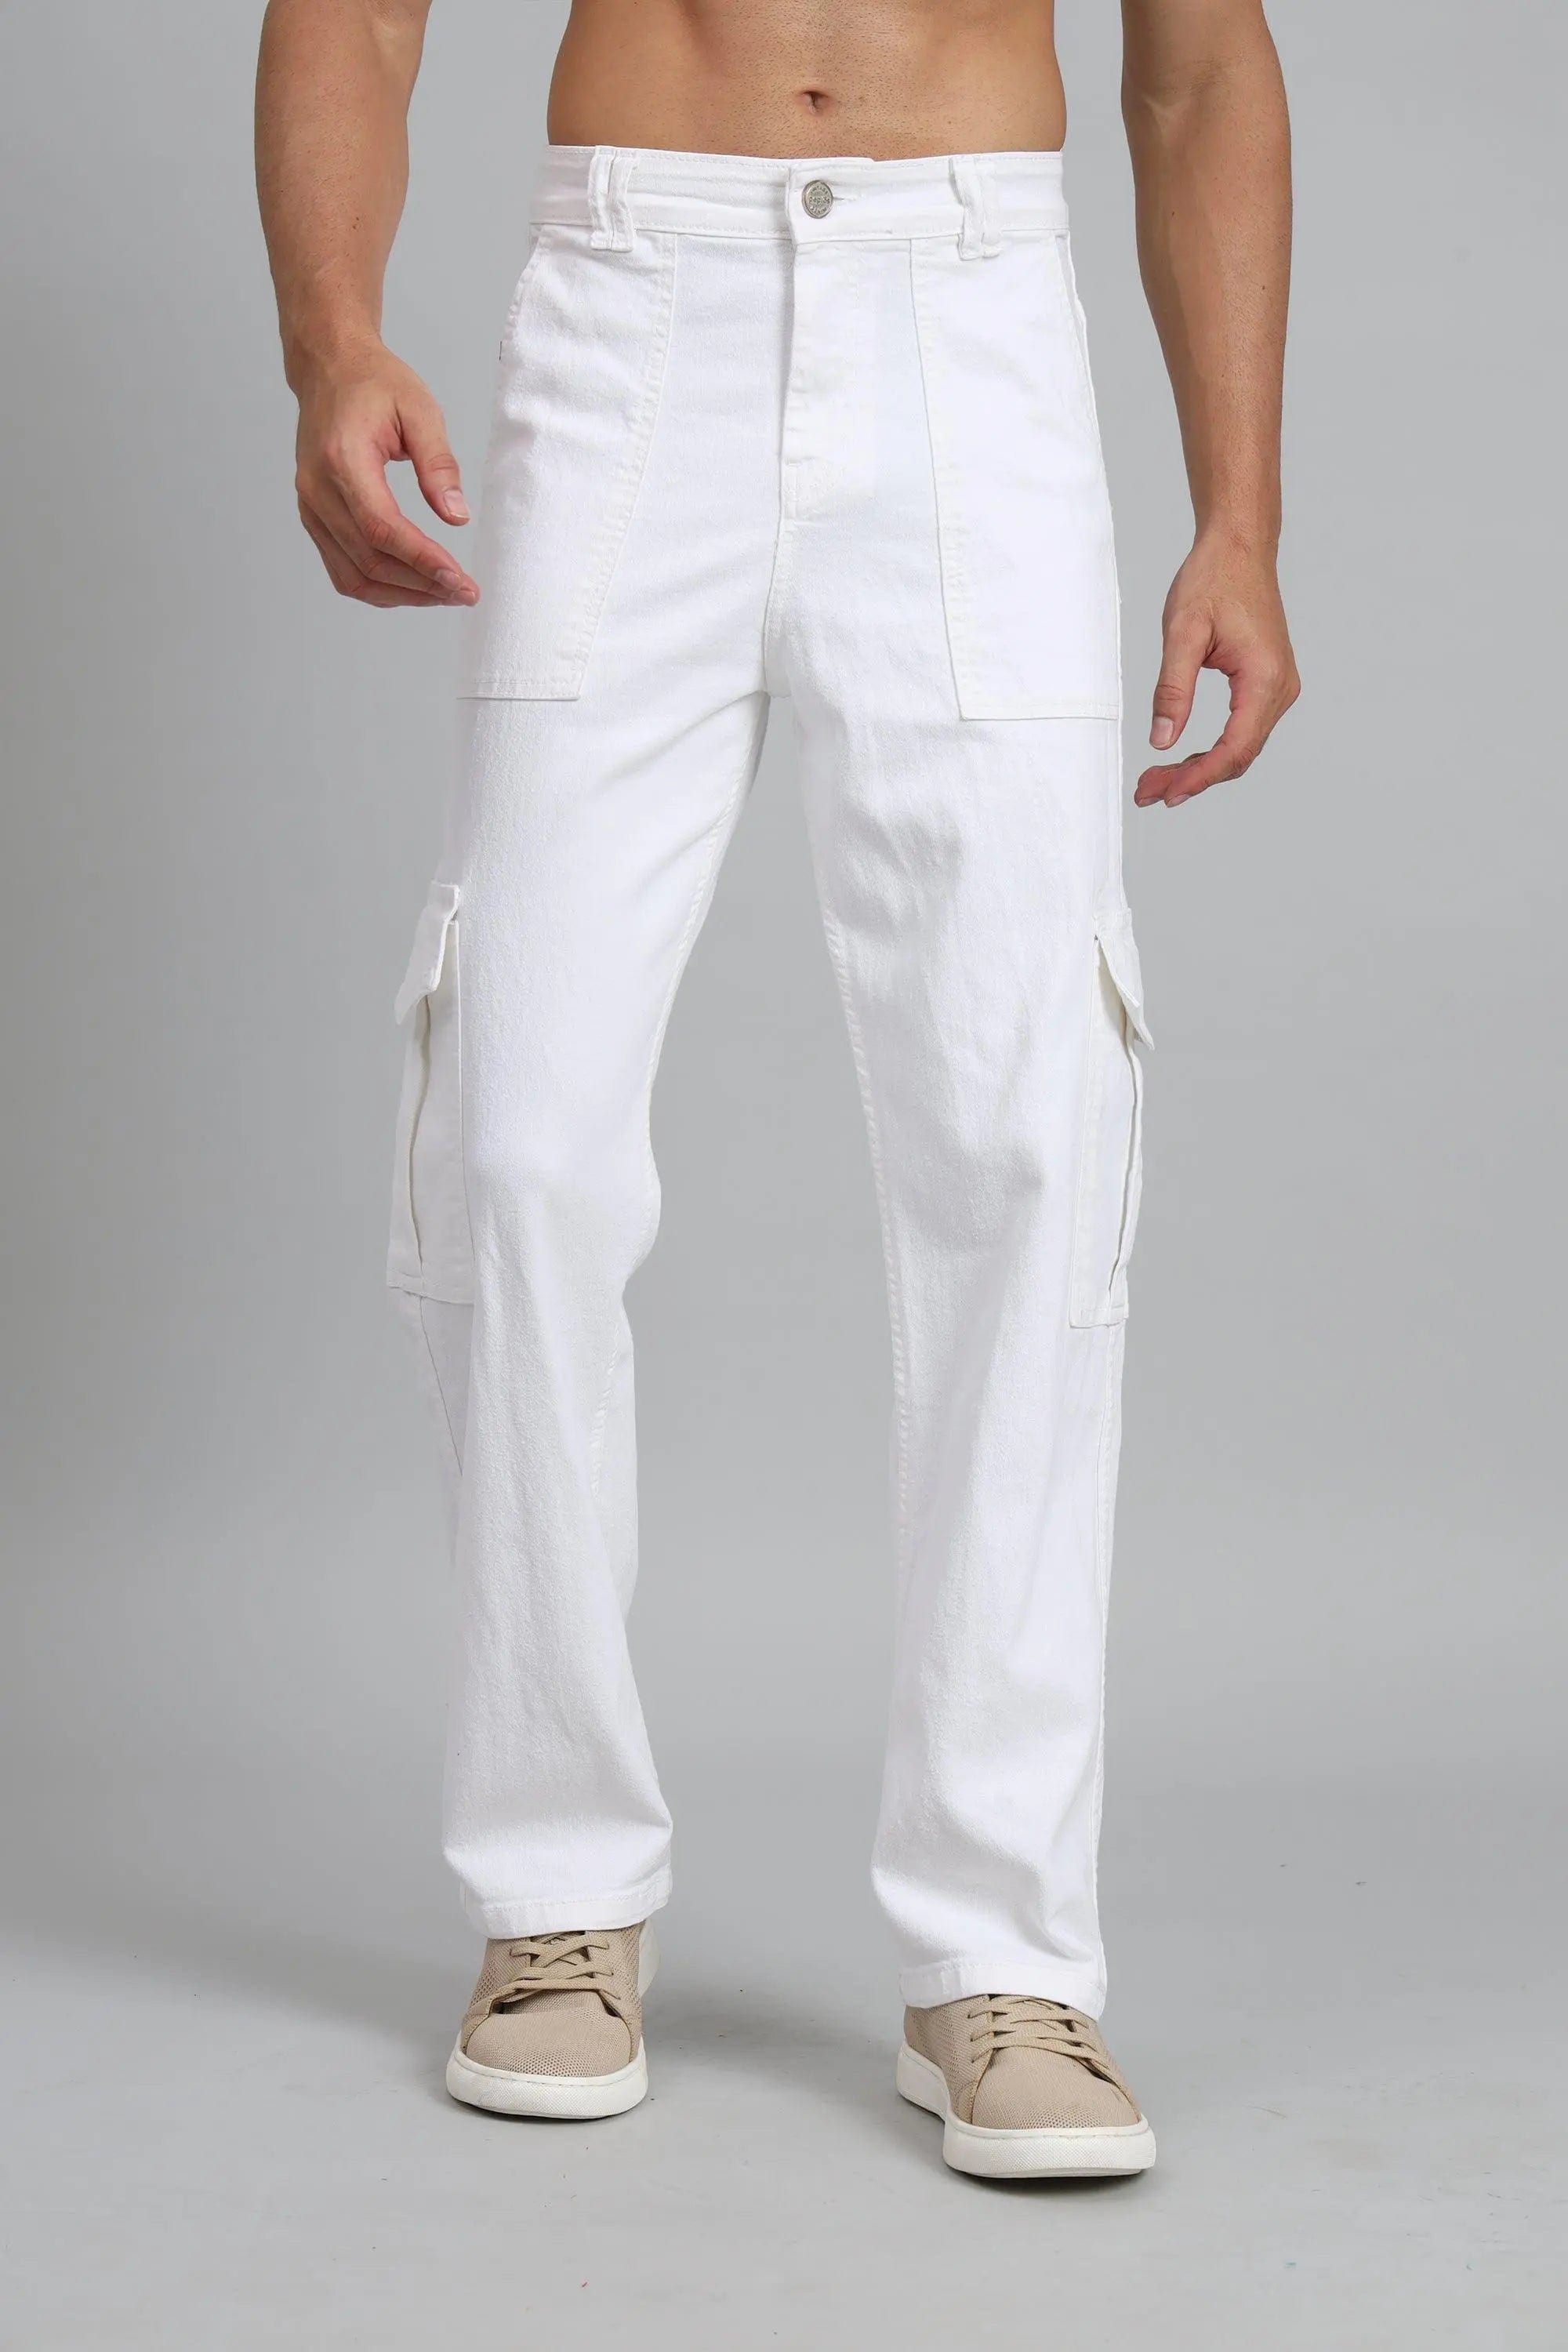 Mens Jeans Cargo Pants Mens Fashion Pocket Denim Men Designer Trousers  Casual Loose Elastic Waist From Pattern68, $80.77 | DHgate.Com